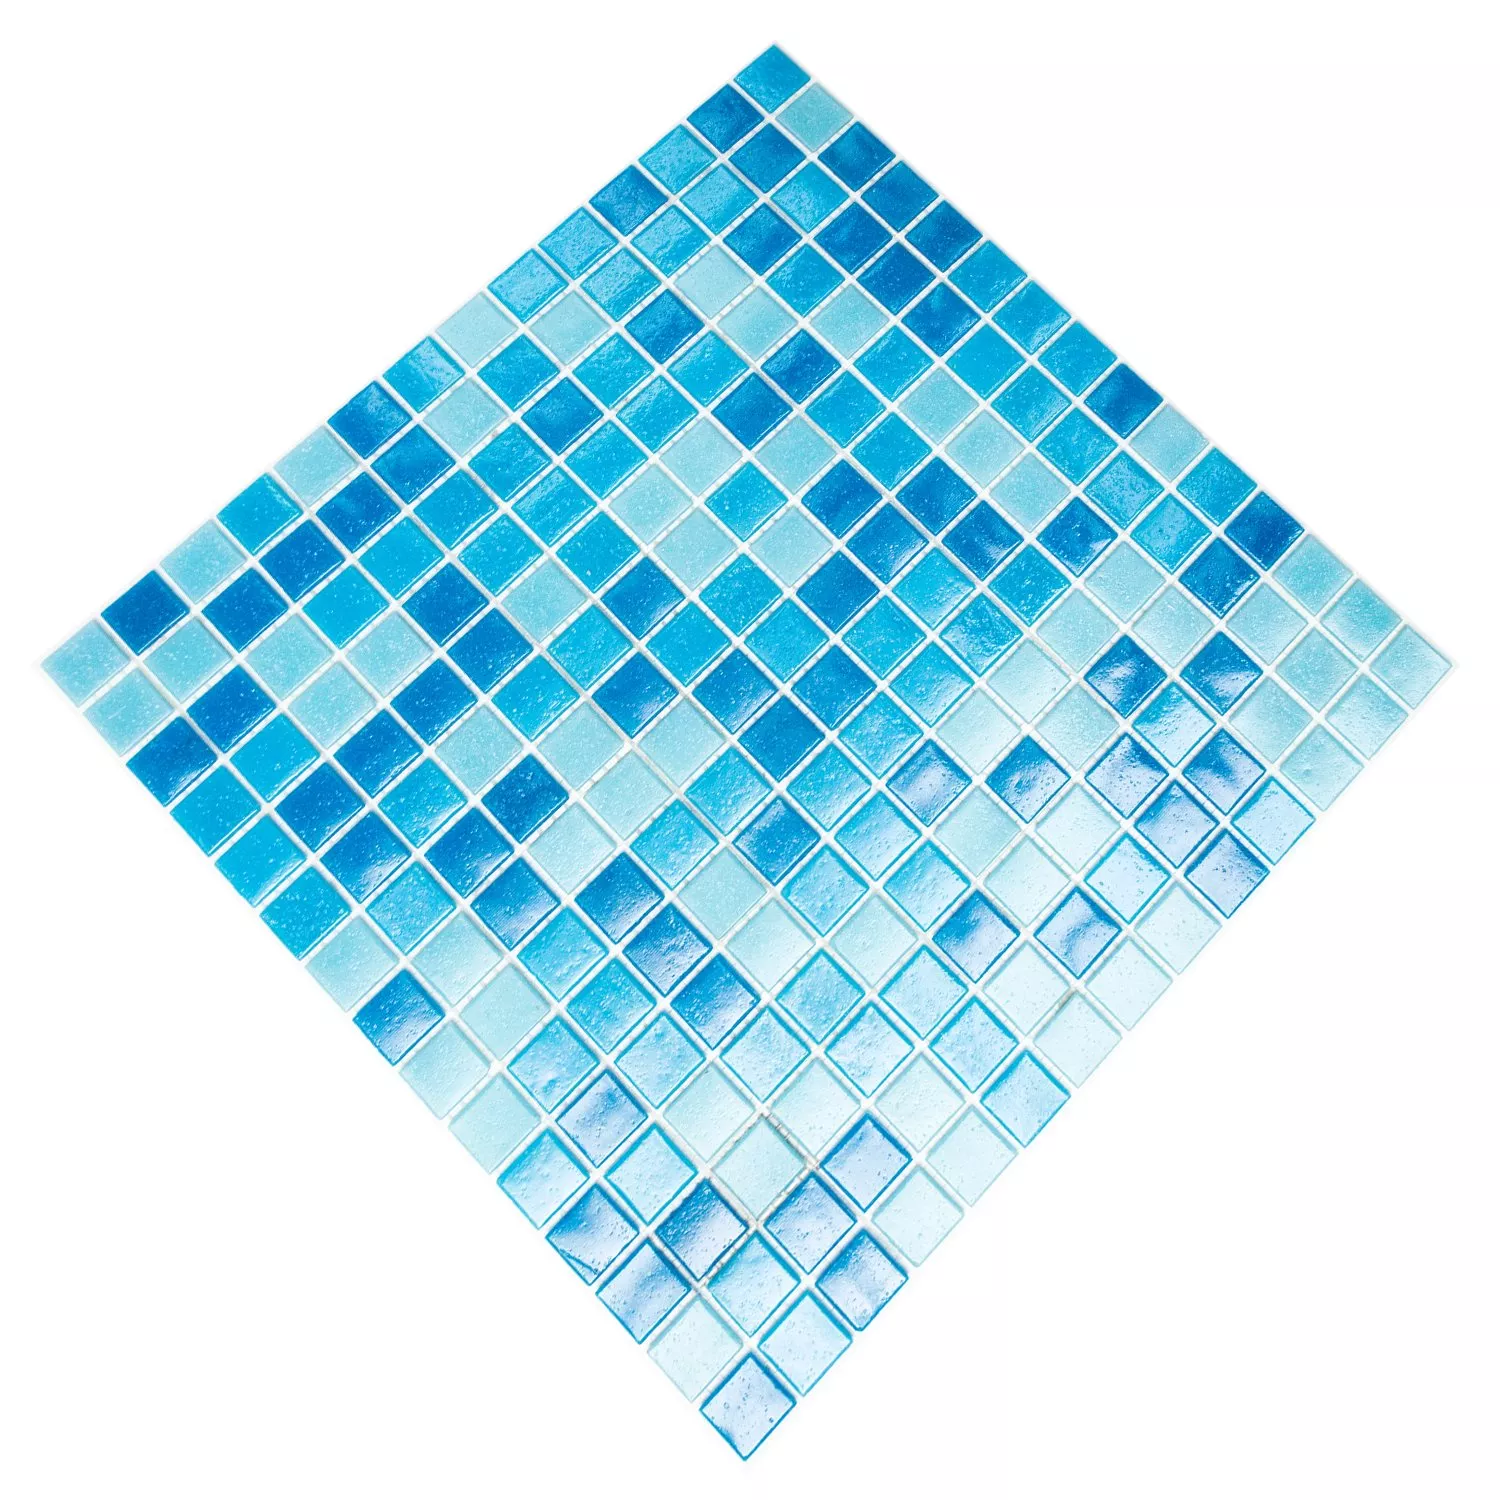 Sample Mosaic Tiles Glass Blue Mix